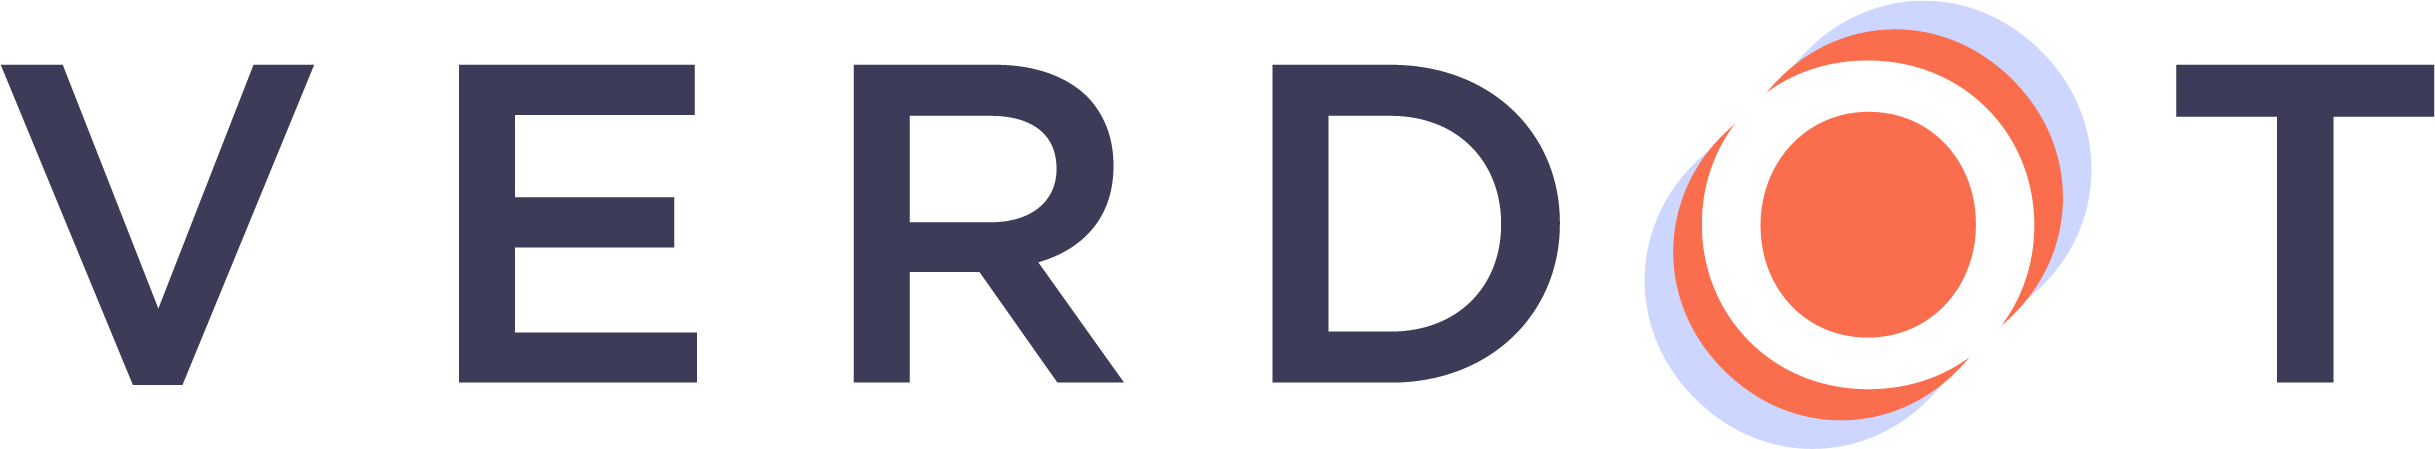 logo-Verdot